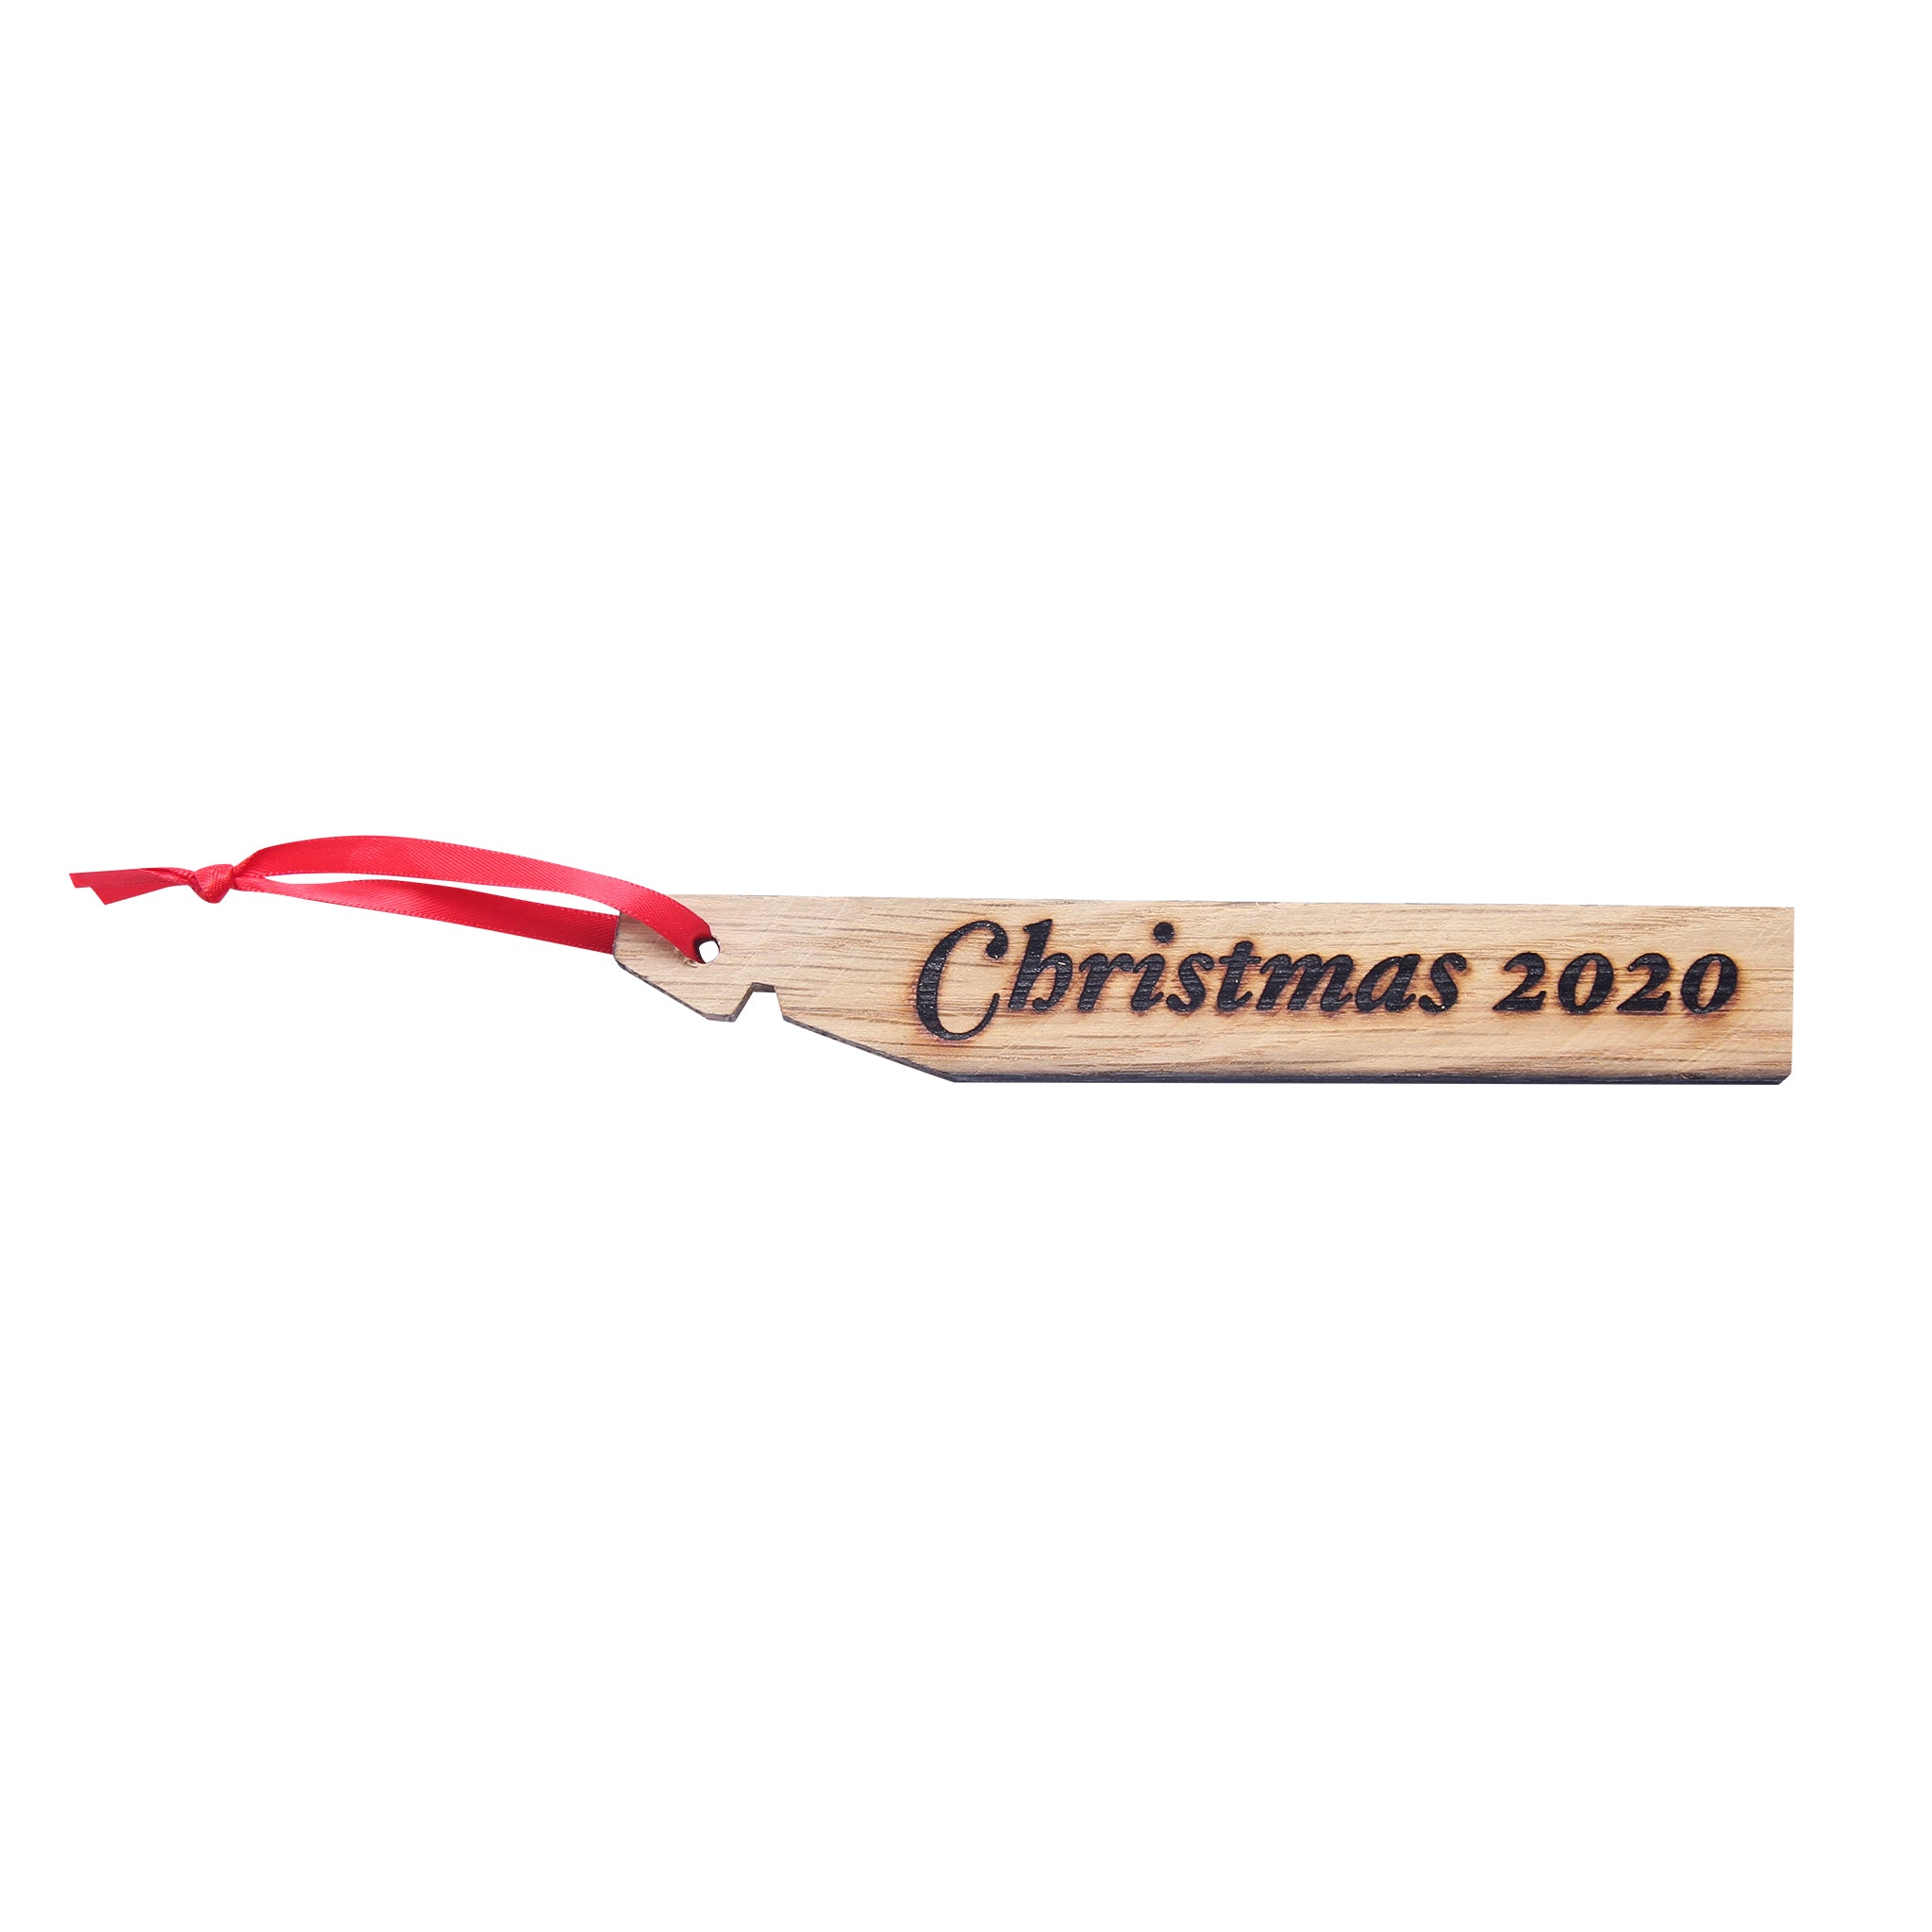 Christmas 2020 Ornament